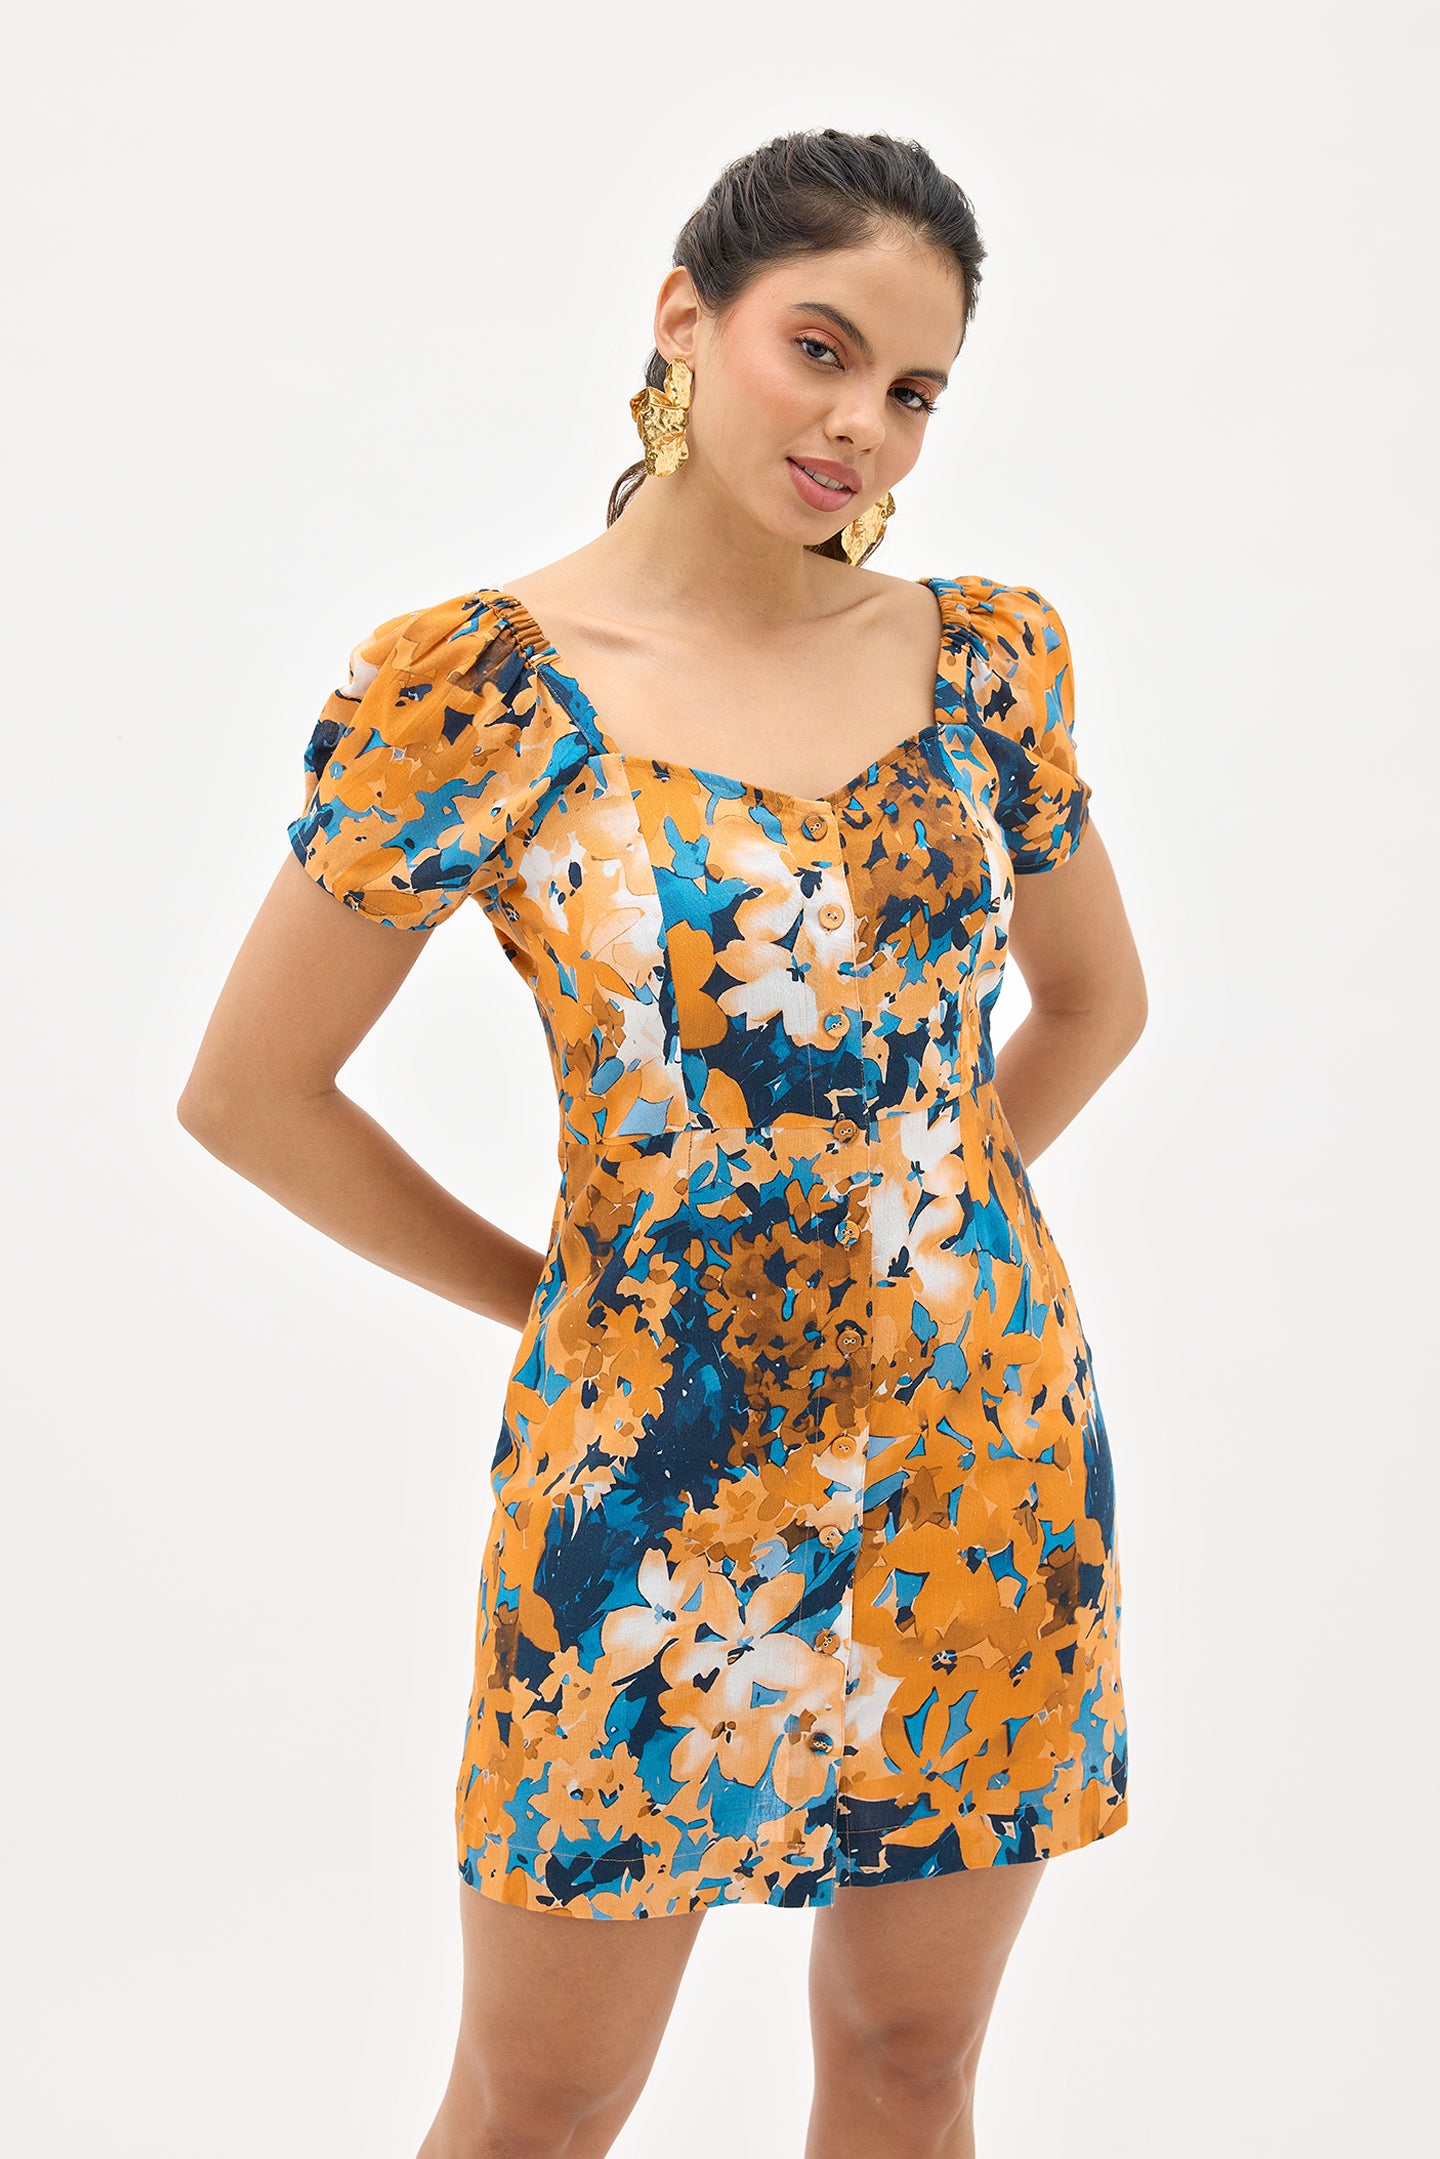 Novah|Breathable cotton sweetheart neckline dress